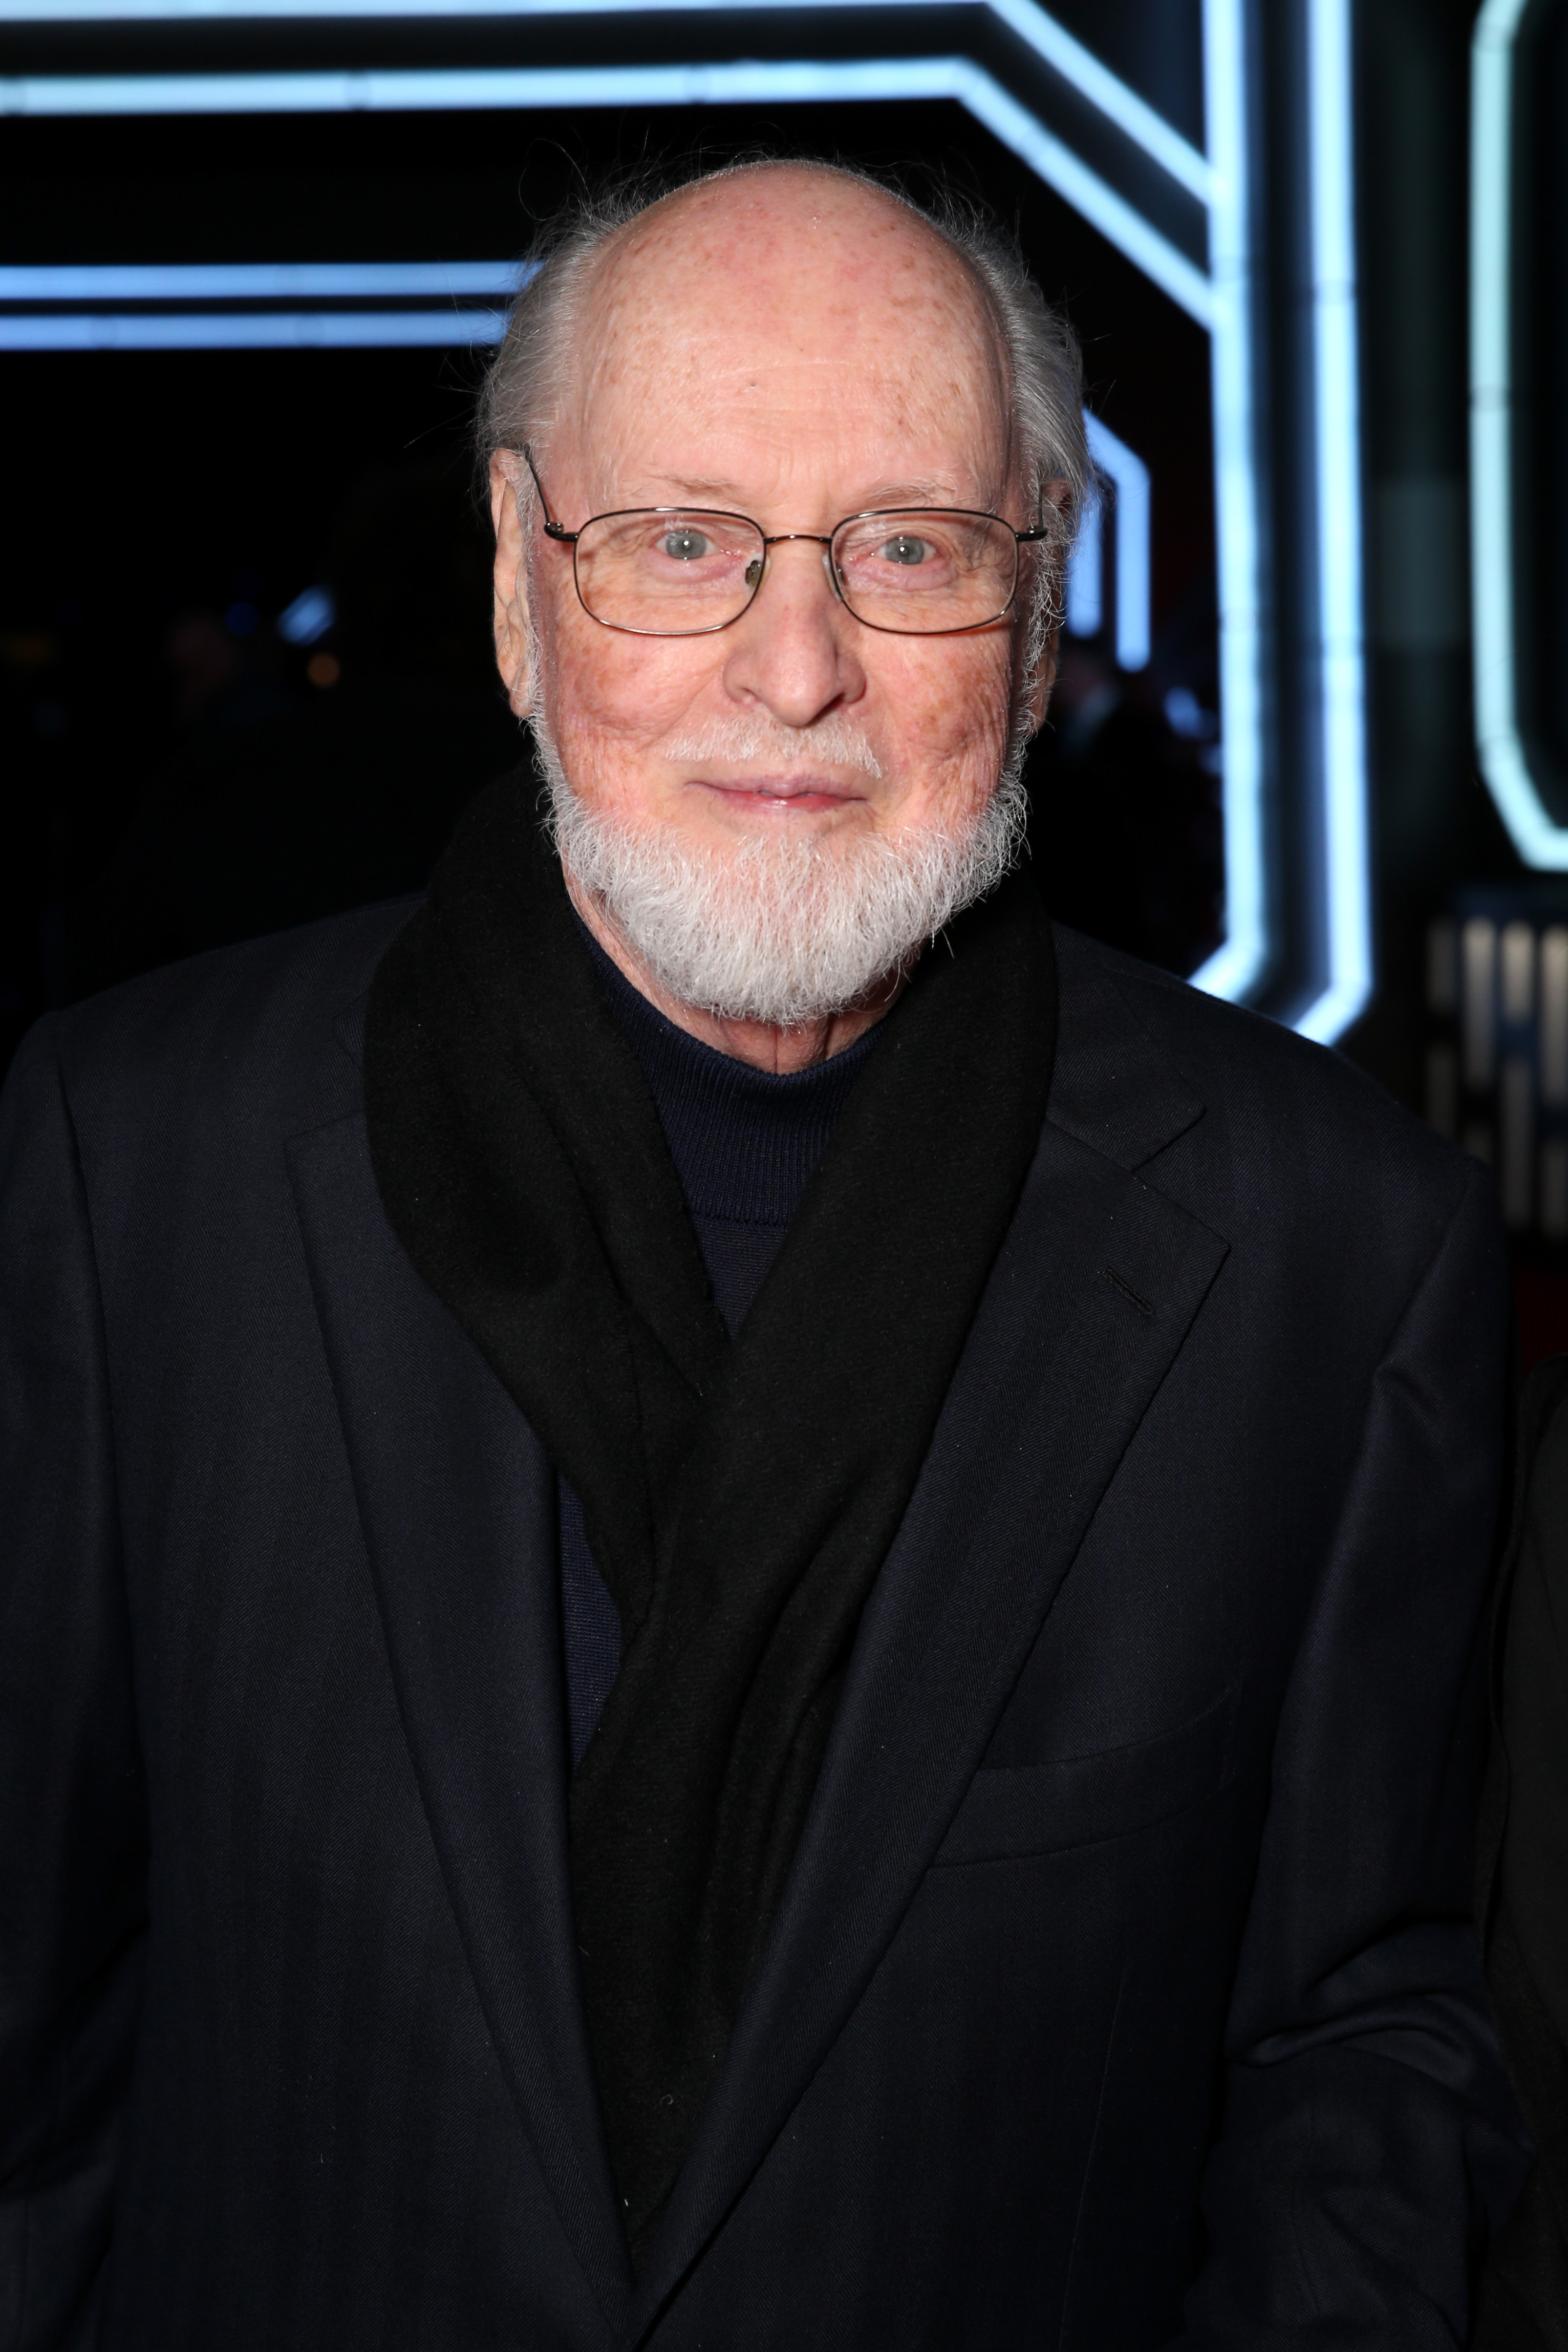 John Williams is seen on Dec. 14, 2015 in Hollywood, Calif.